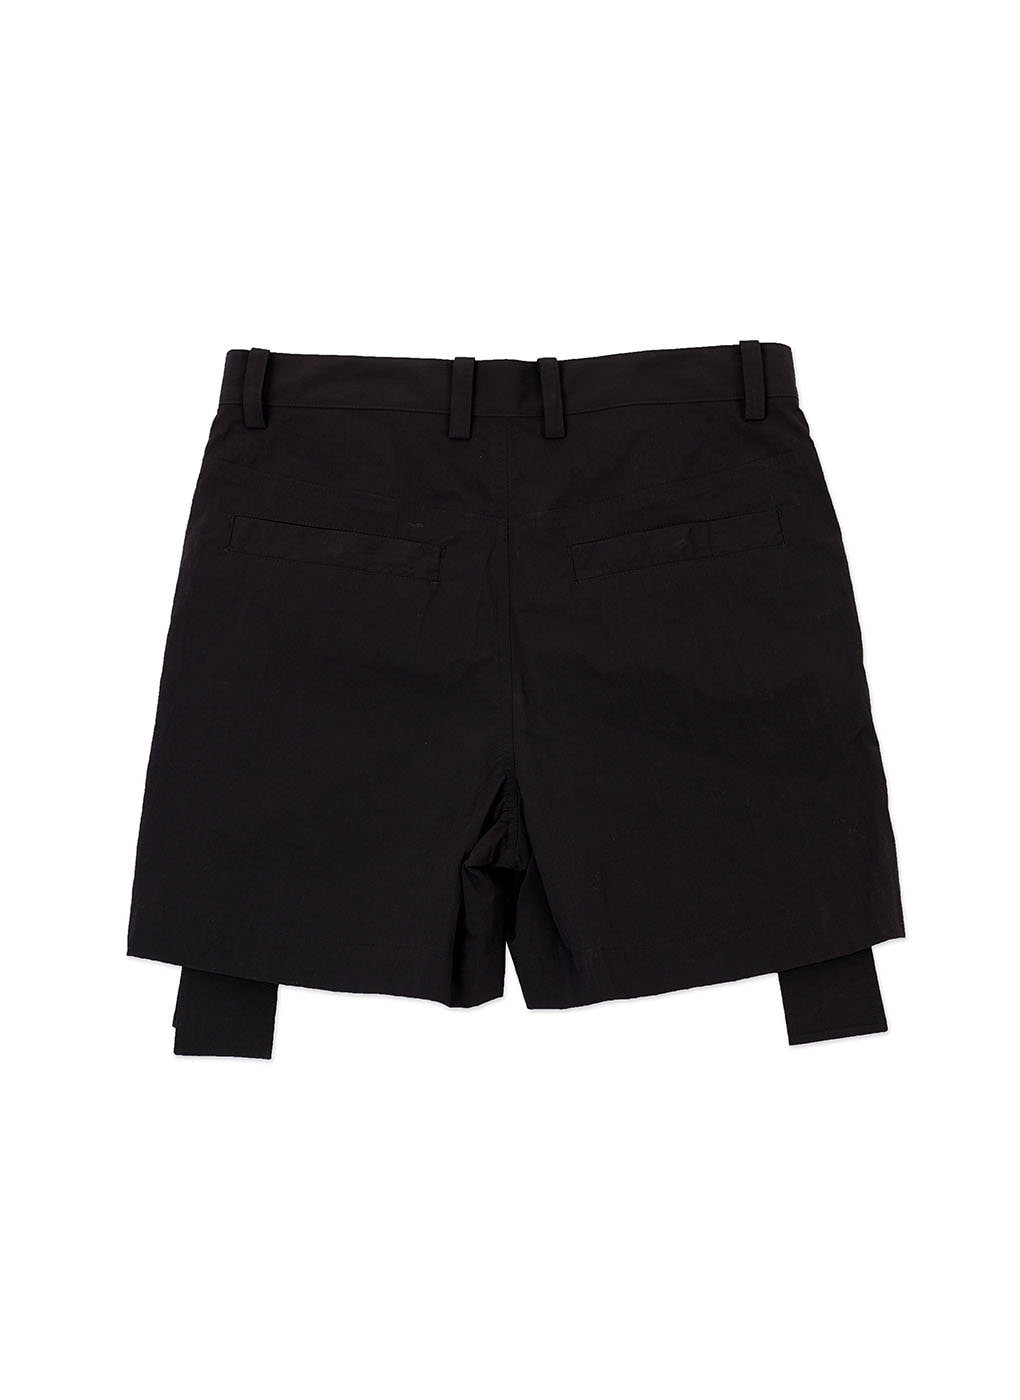 Black Zipper Shorts